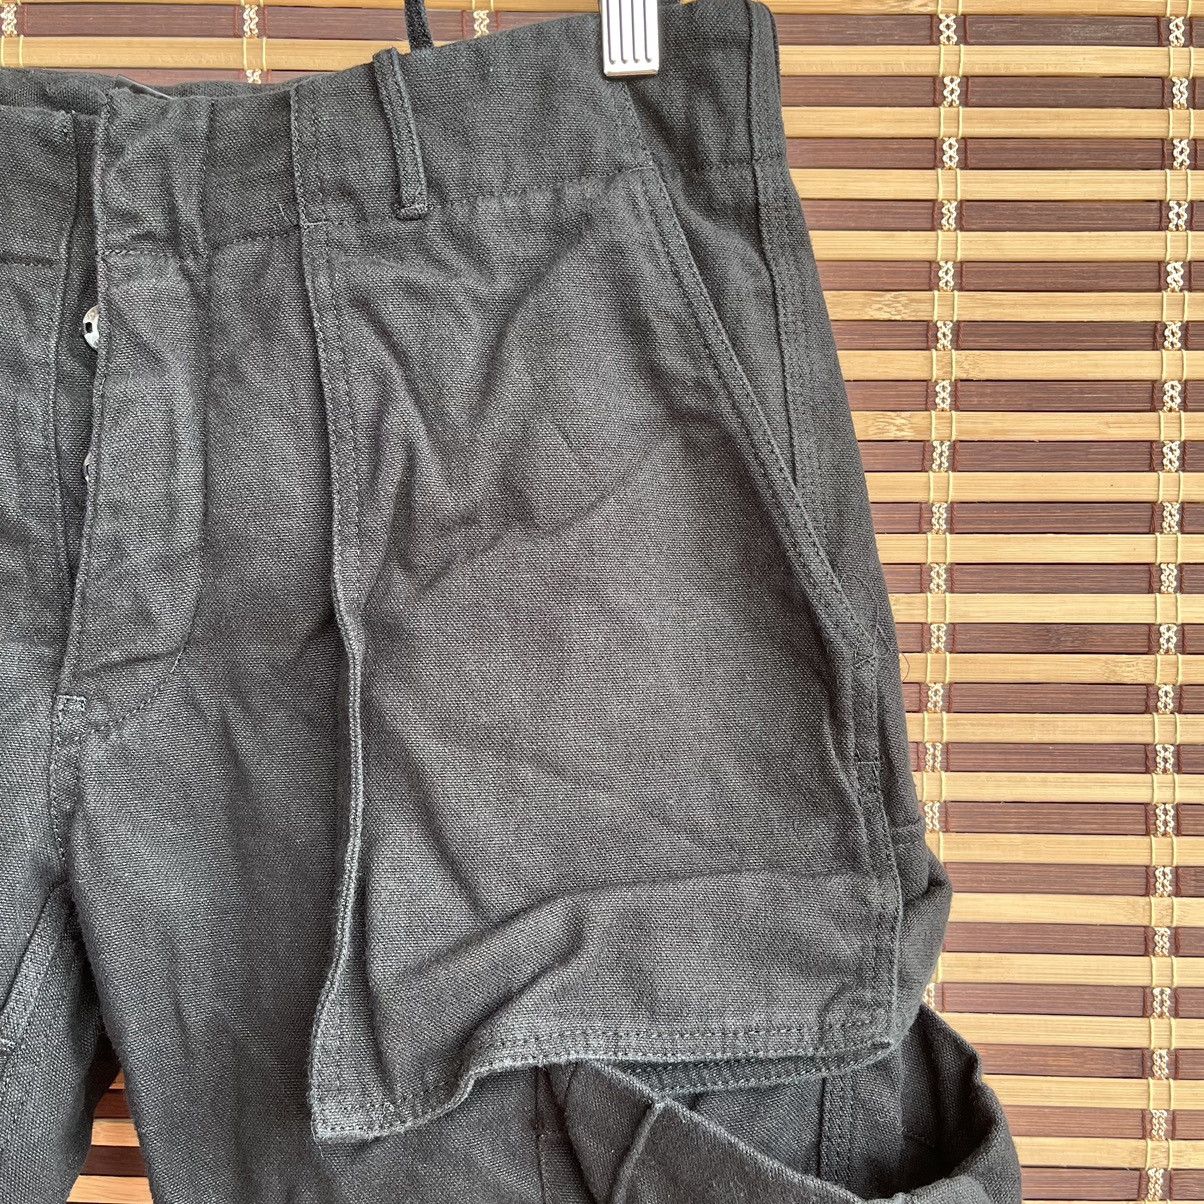 Seditionaries Dirain Tactical Cropped Pants Delta Store - 7